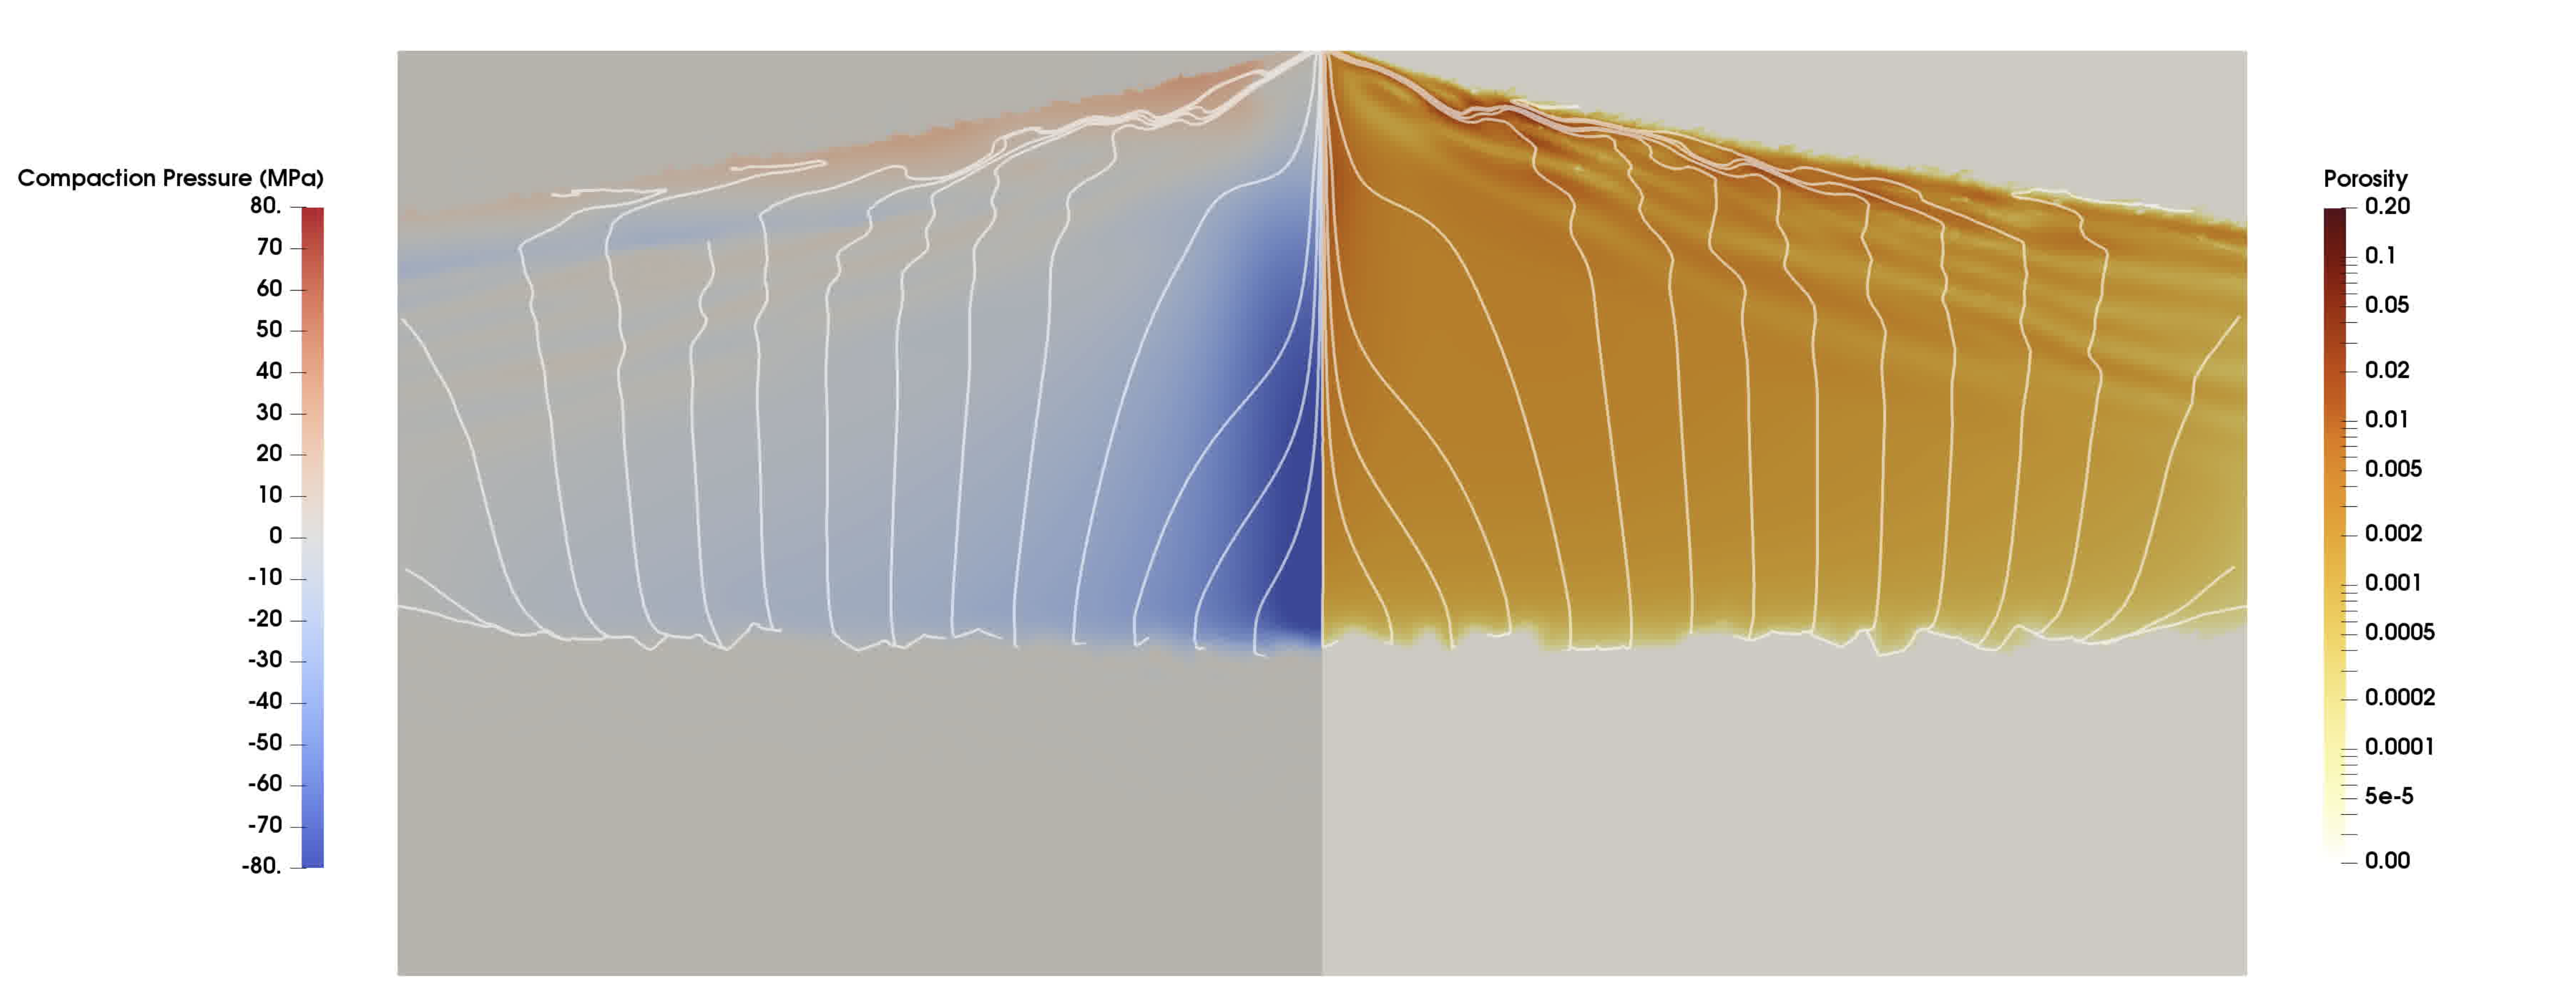 Porosity waves from Sim et al 2020.